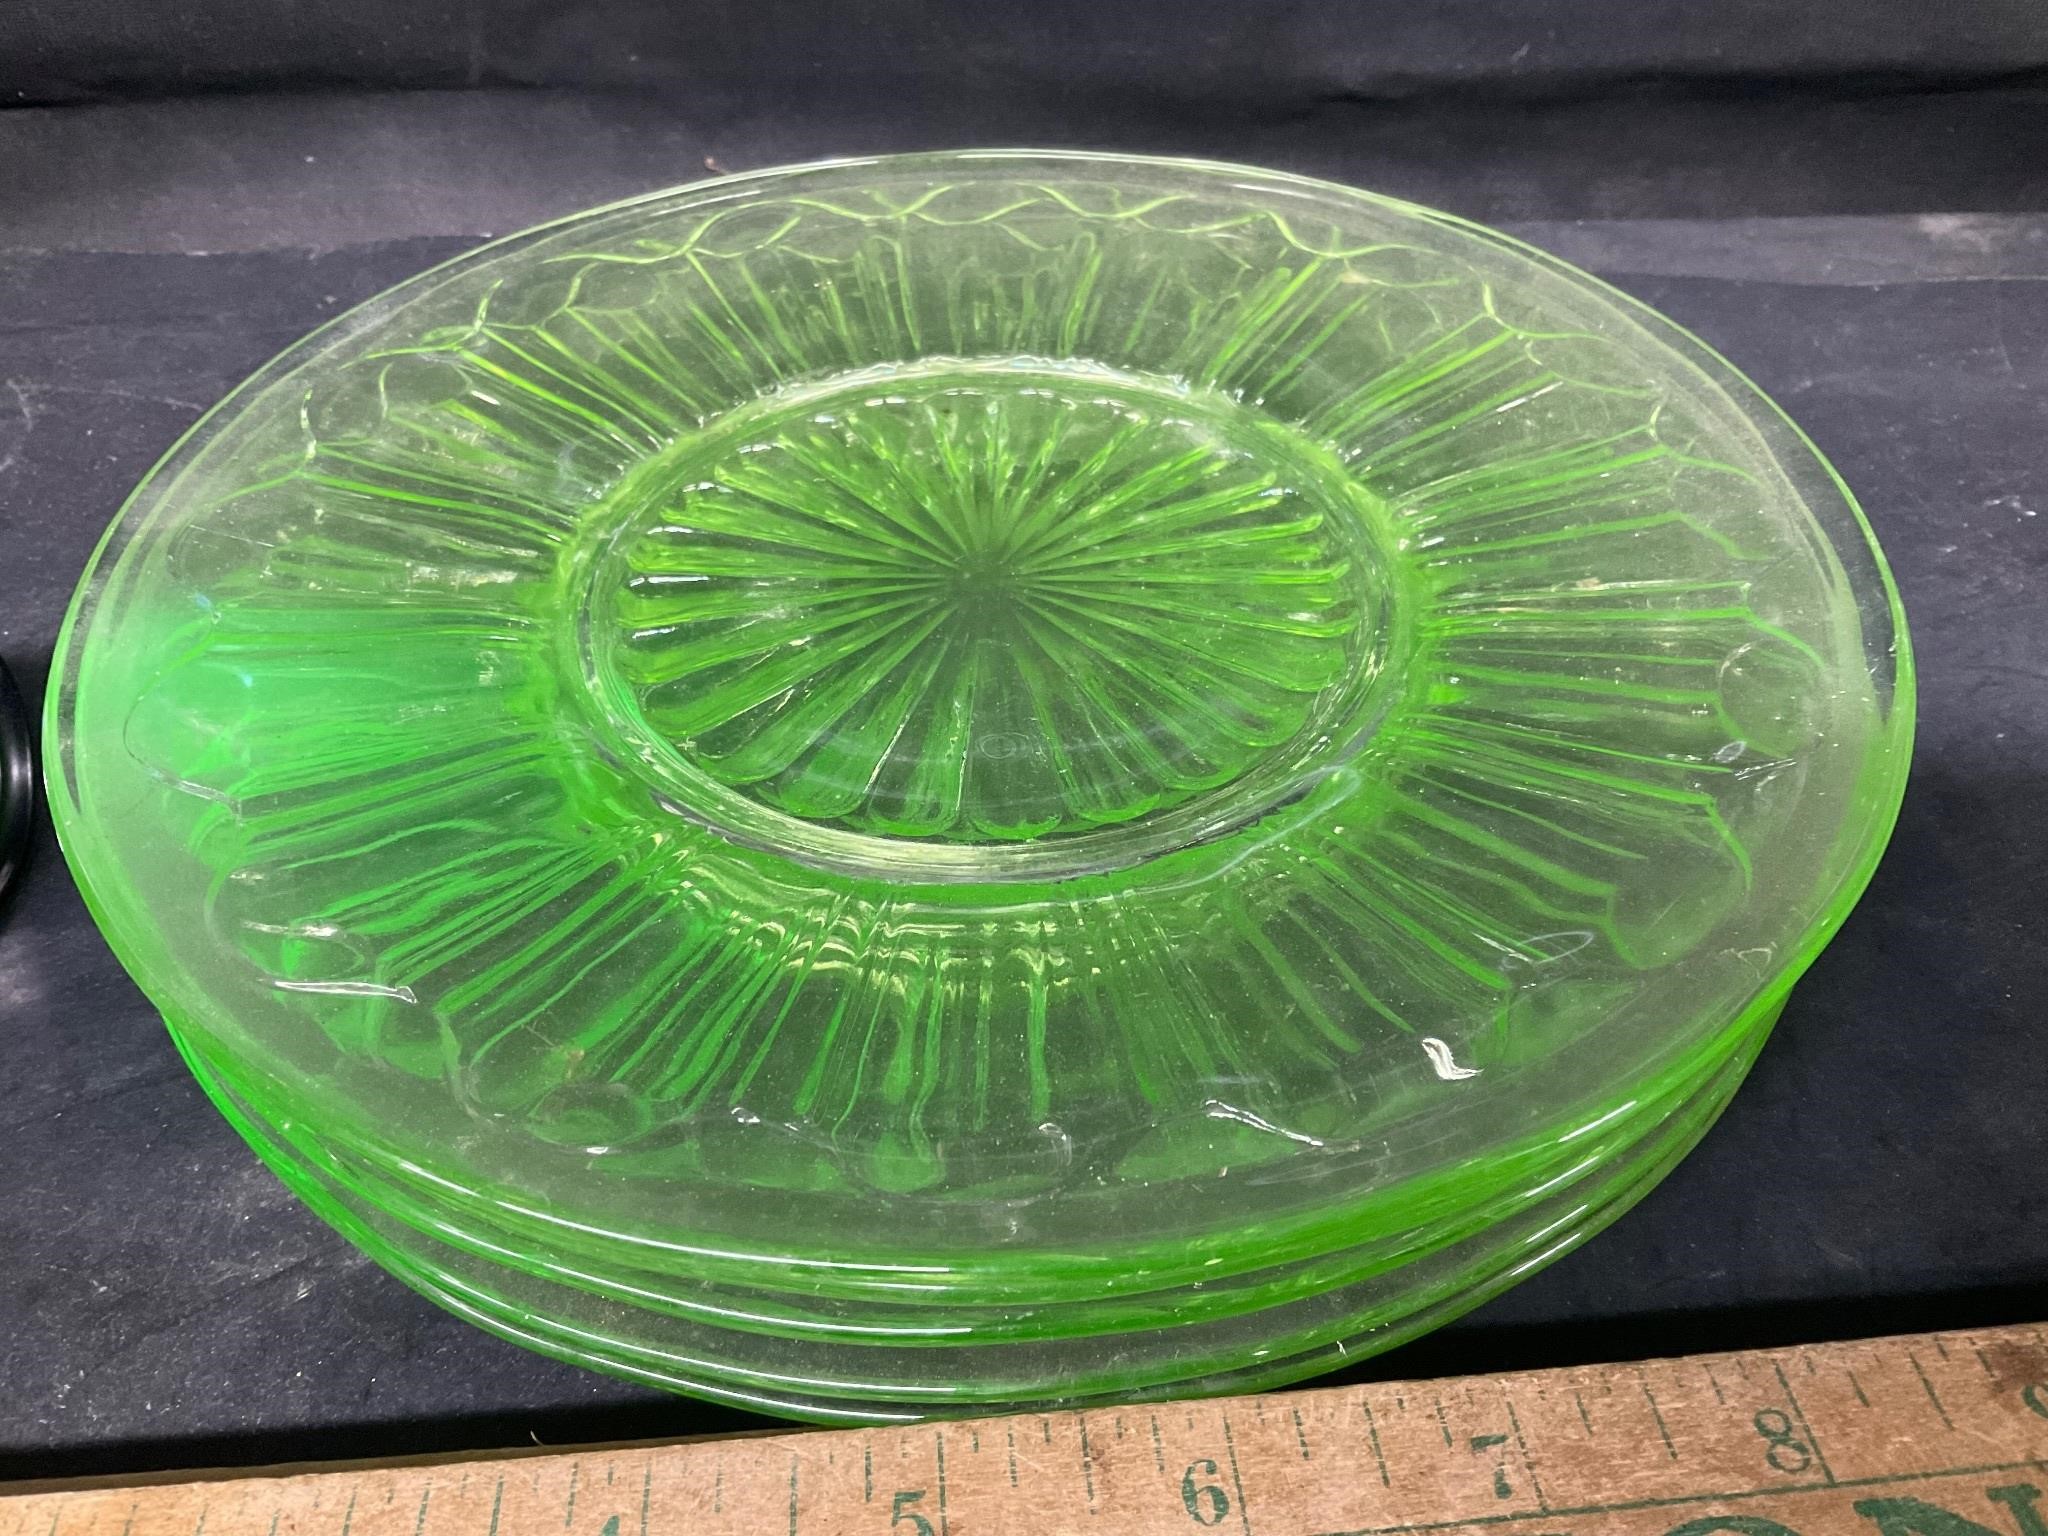 5 Vaseline glass plates